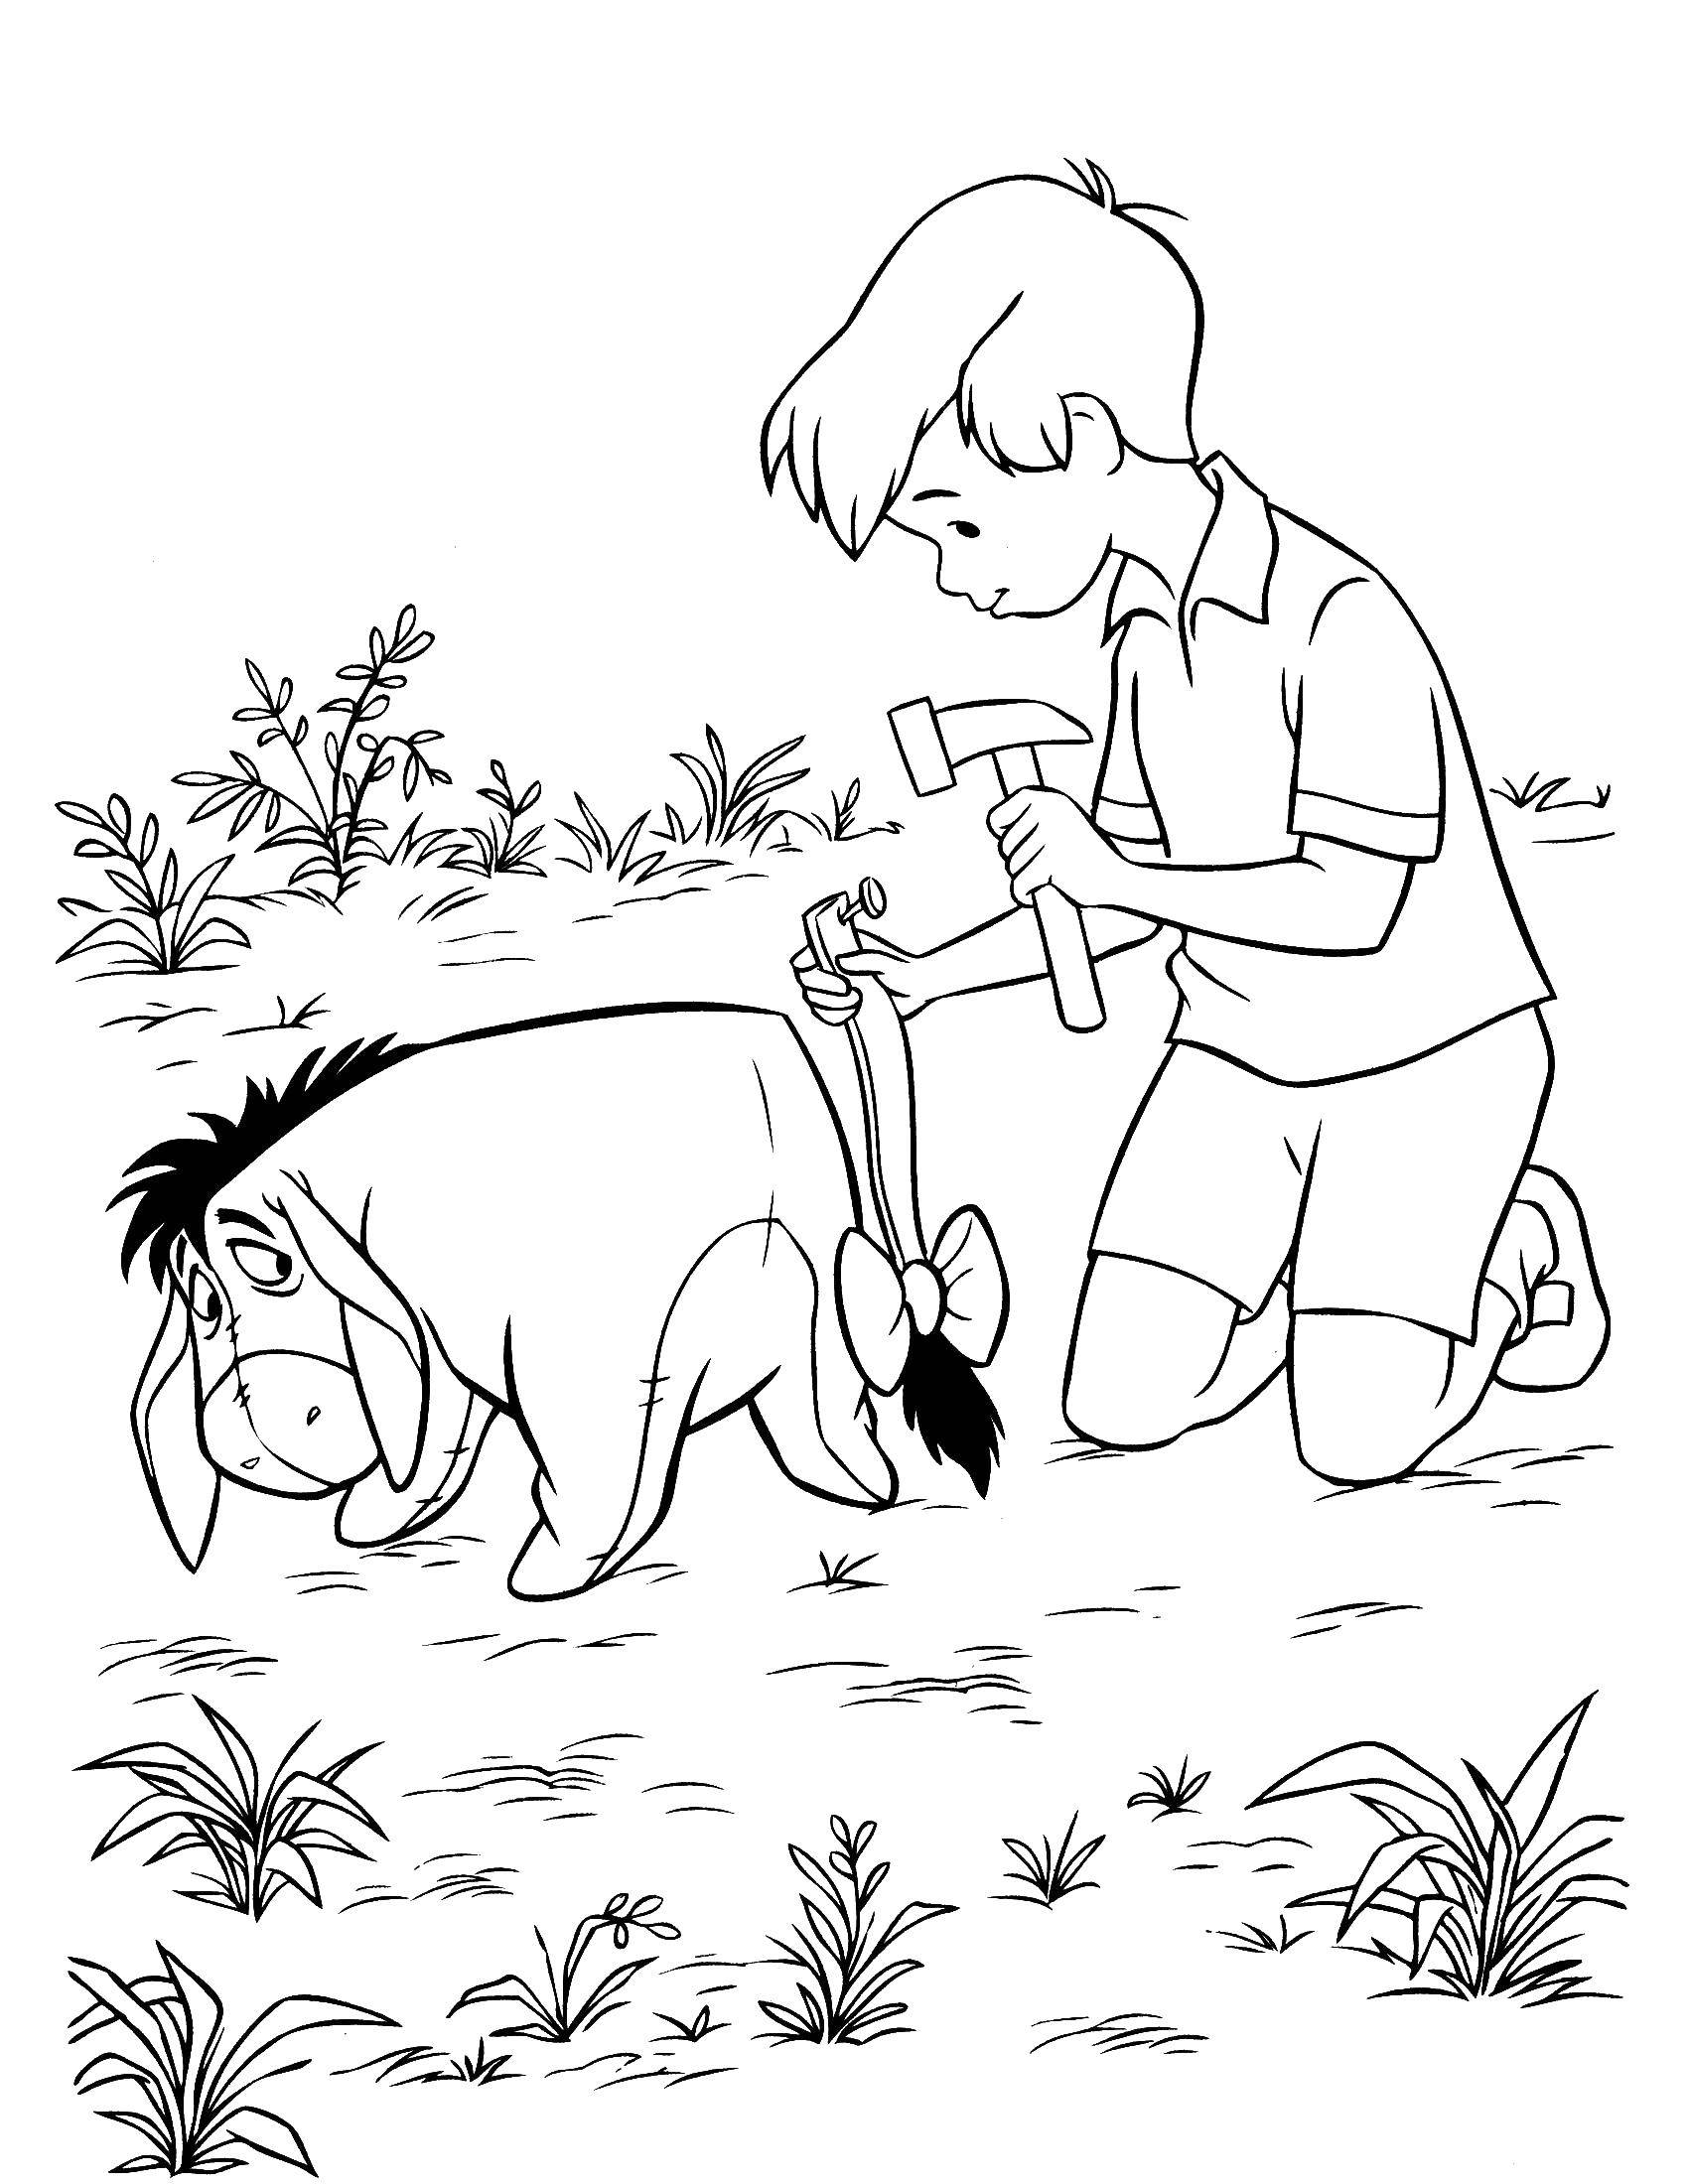 Coloring The boy and the donkey. Category Disney cartoons. Tags:  Disney honey, Winnie the Pooh, Eeyore Eeyore.